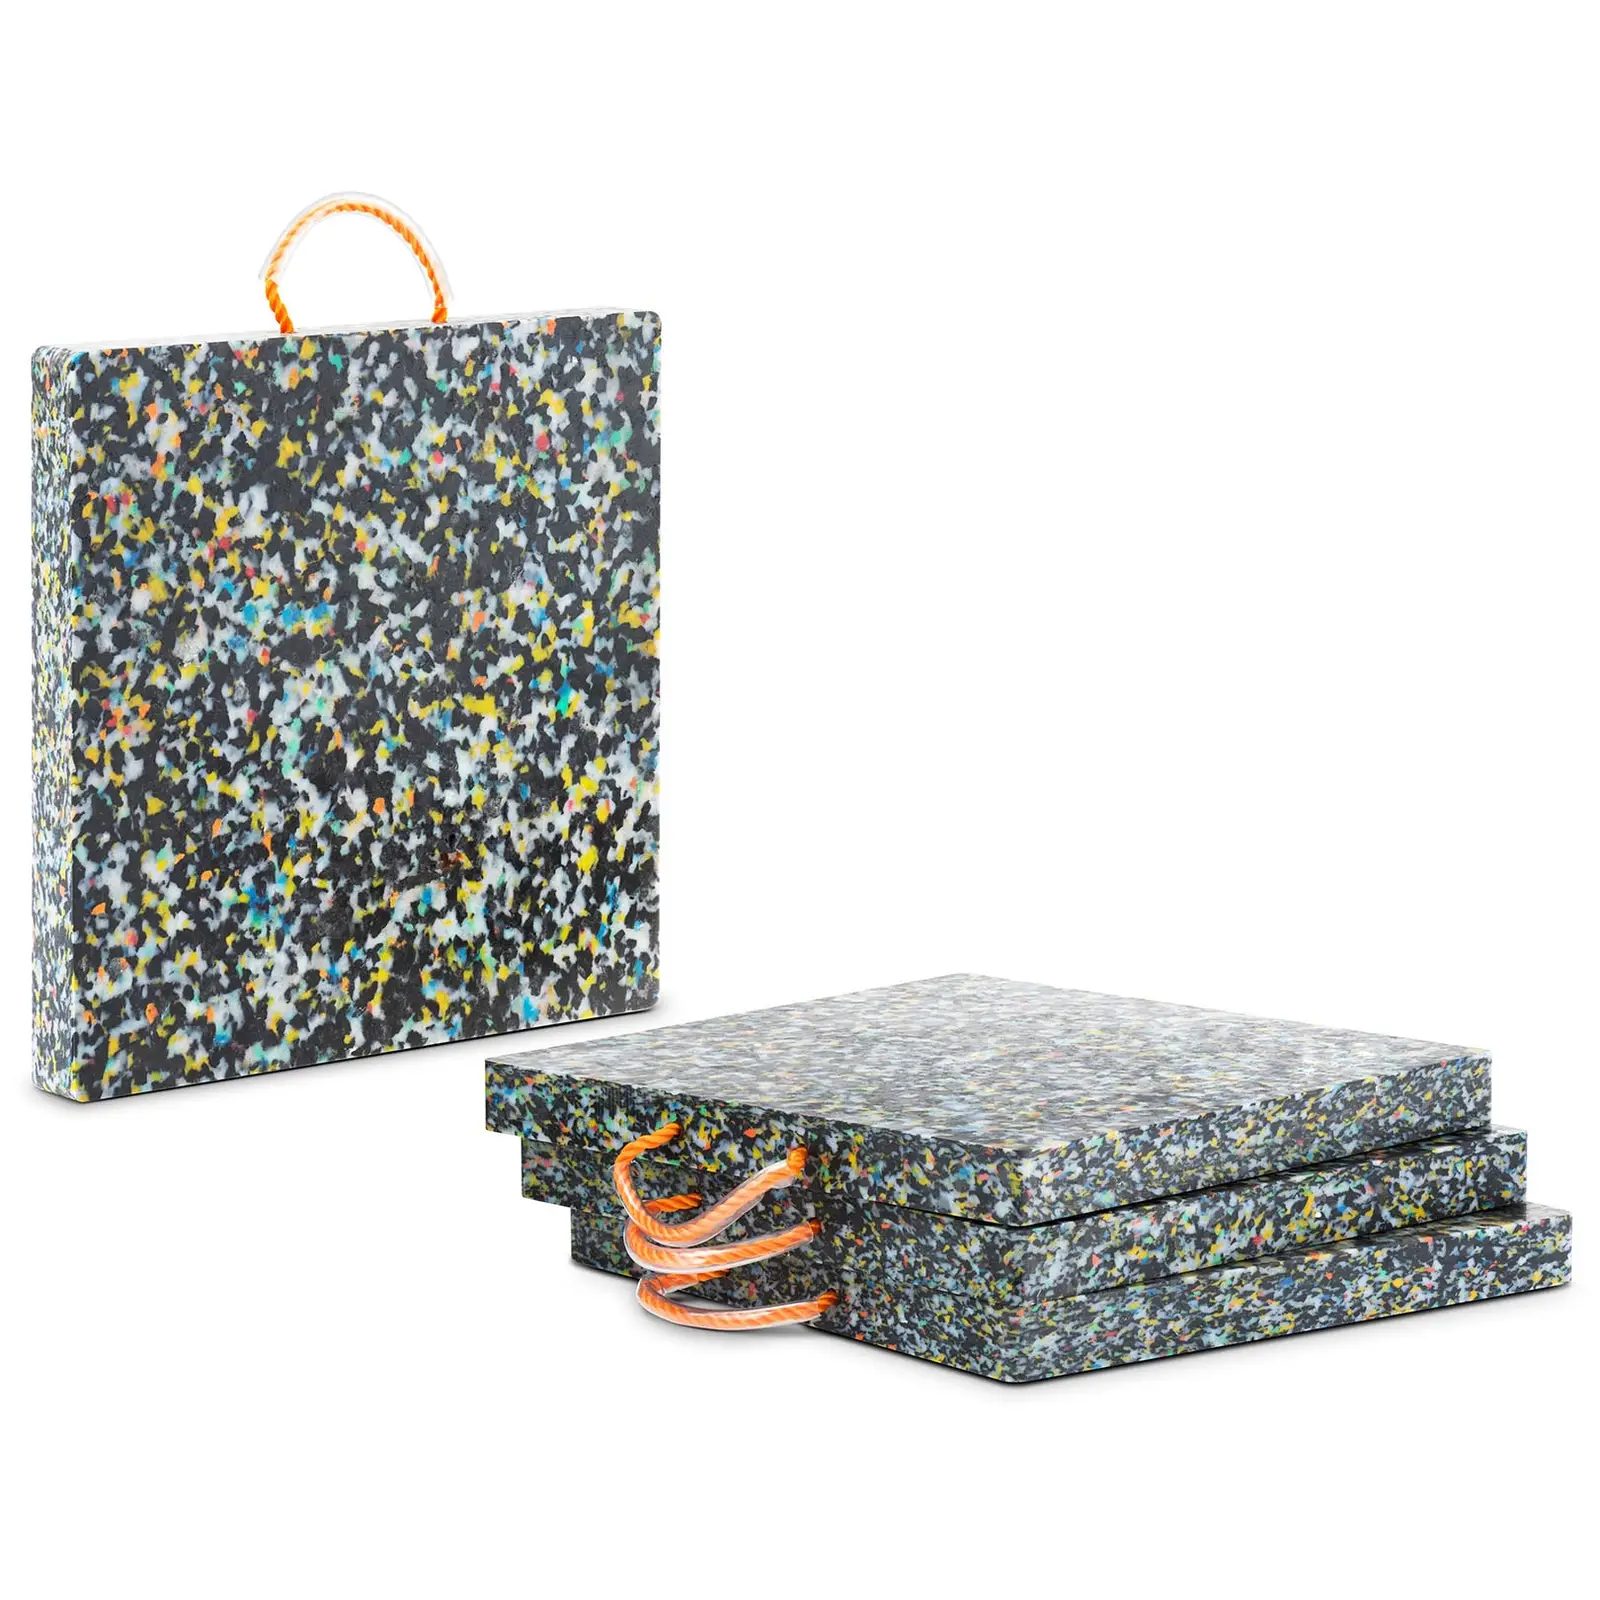 Kranplatten - 50 x 50 x 5 cm - Traglast bis zu 18.000 kg - 4 Stück